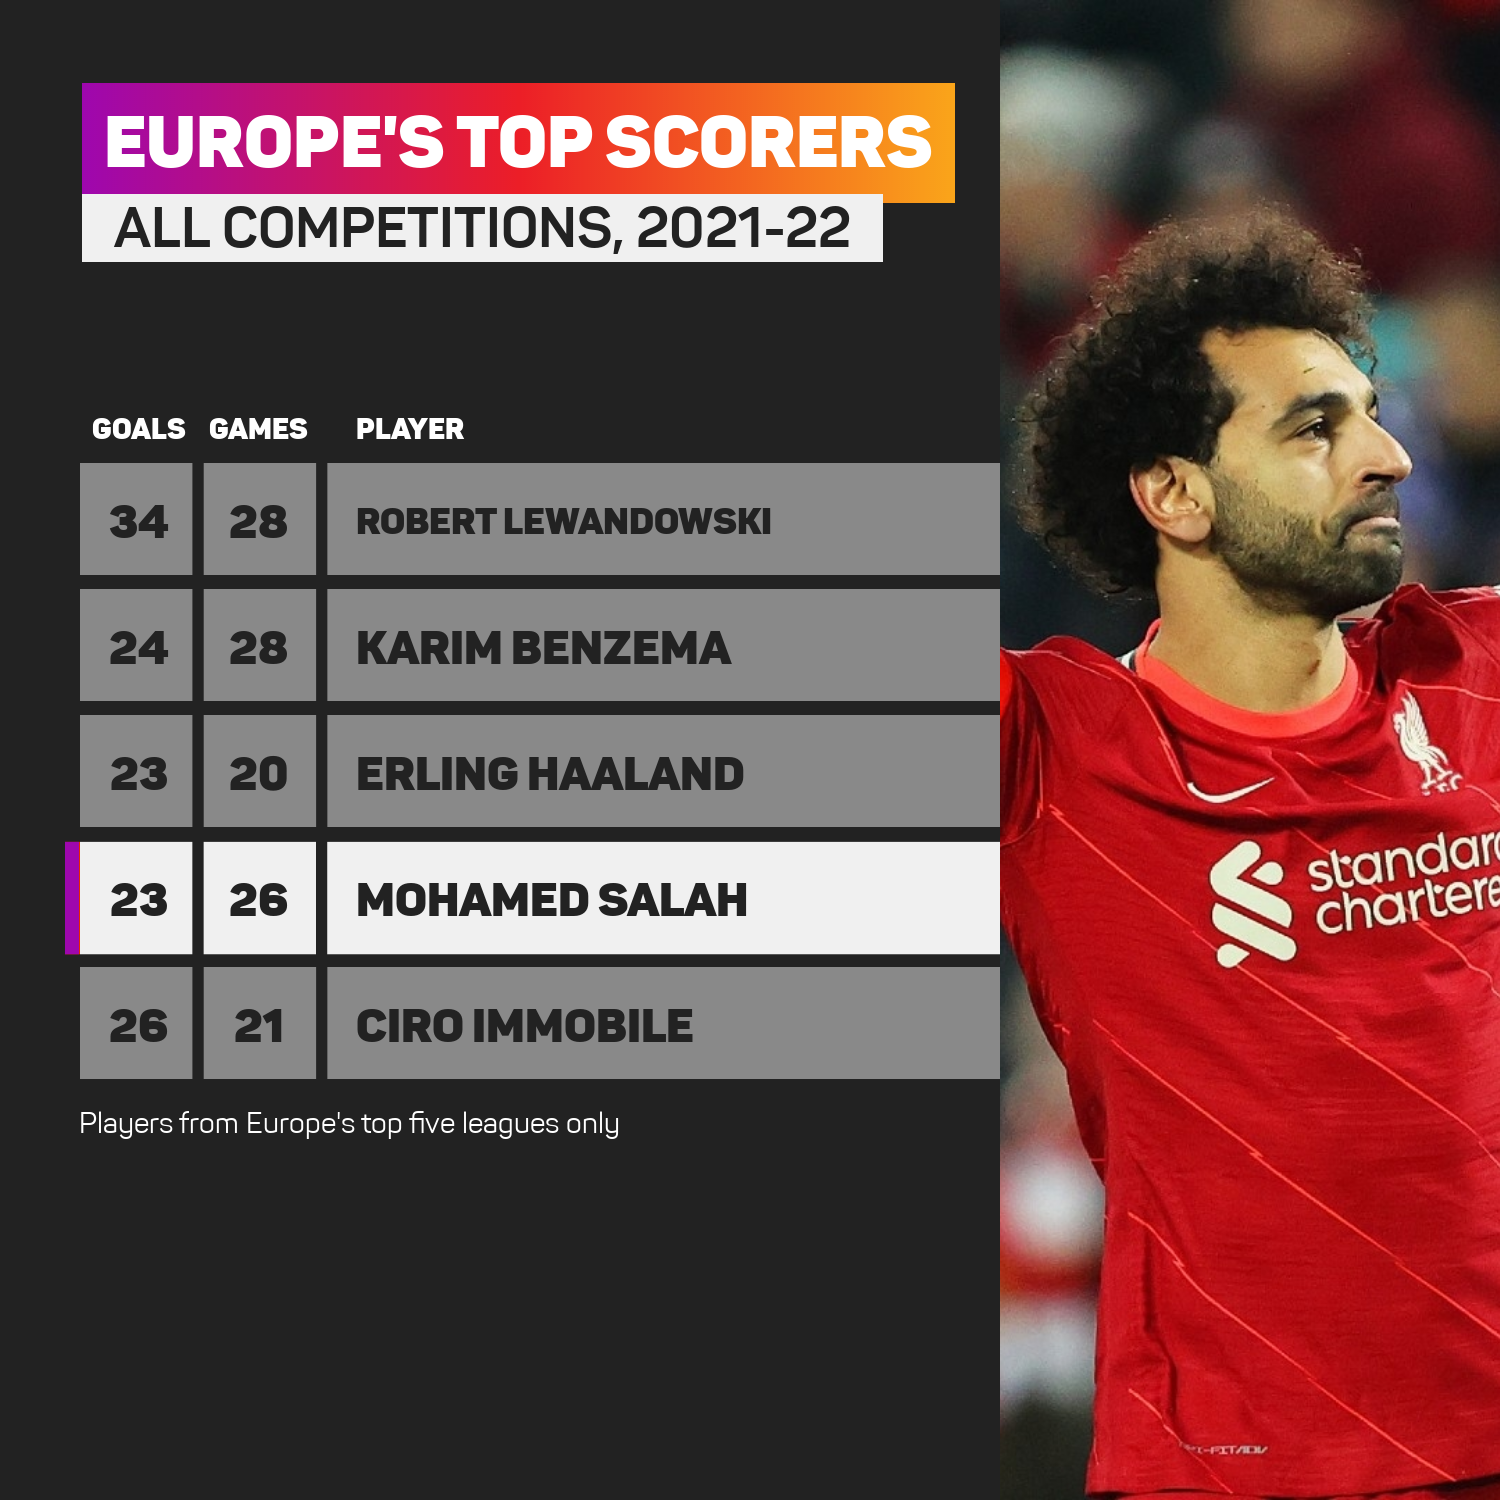 Mohamed Salah has been among Europe's top scorers this season